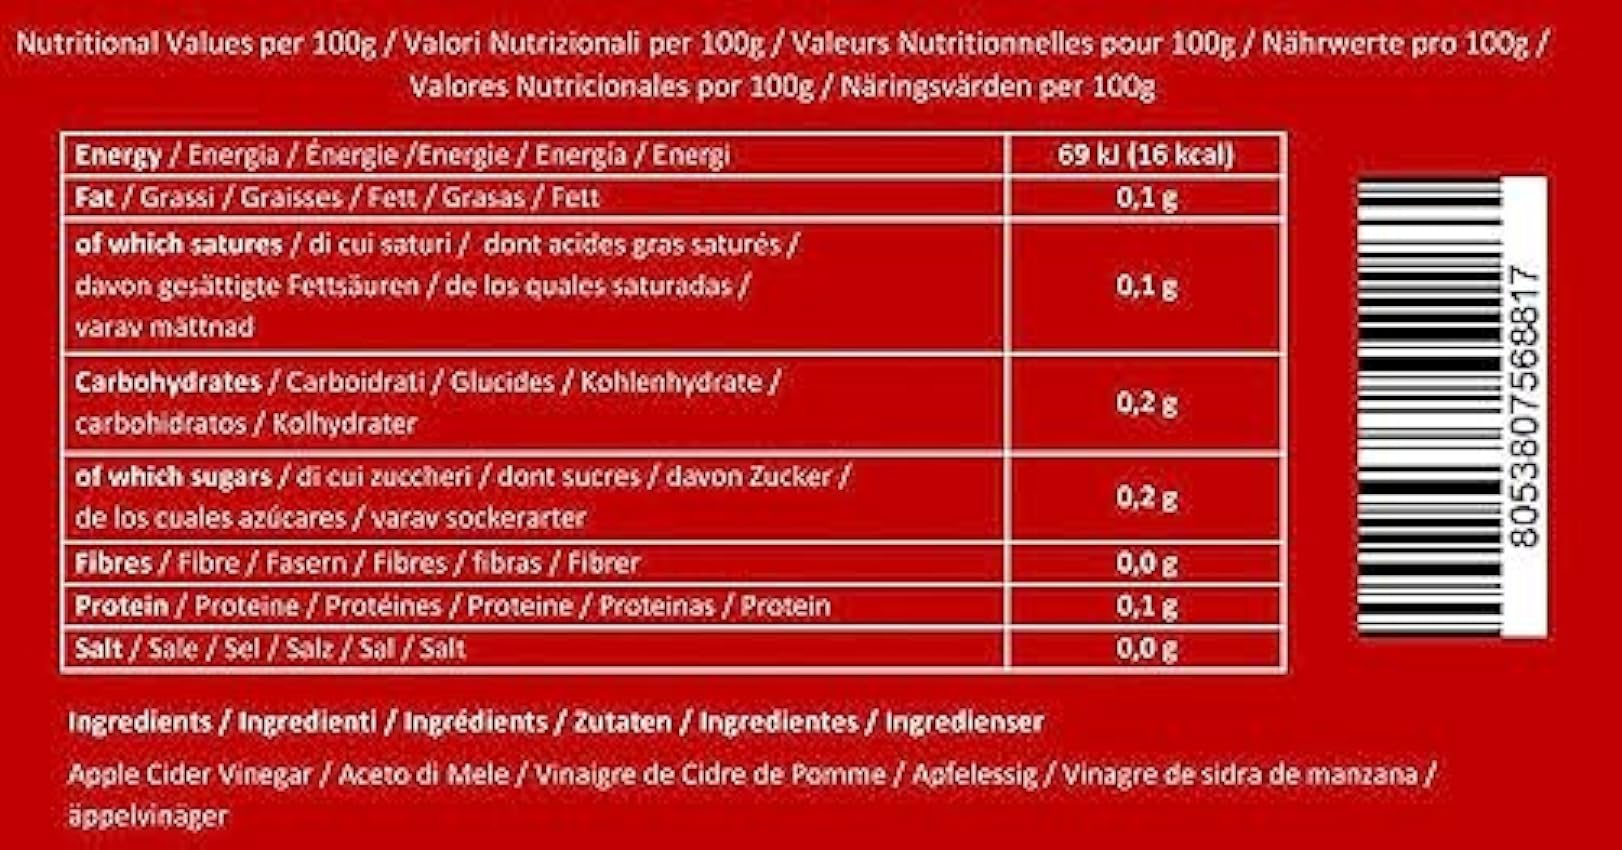 Veggy Duck - Vinagre de Sidra de Manzana Natural Italiano con la Madre (2 x 500ml) - Puro | Sin Filtrar | Sin Pasteurizar | Sin OMG osRHztpT